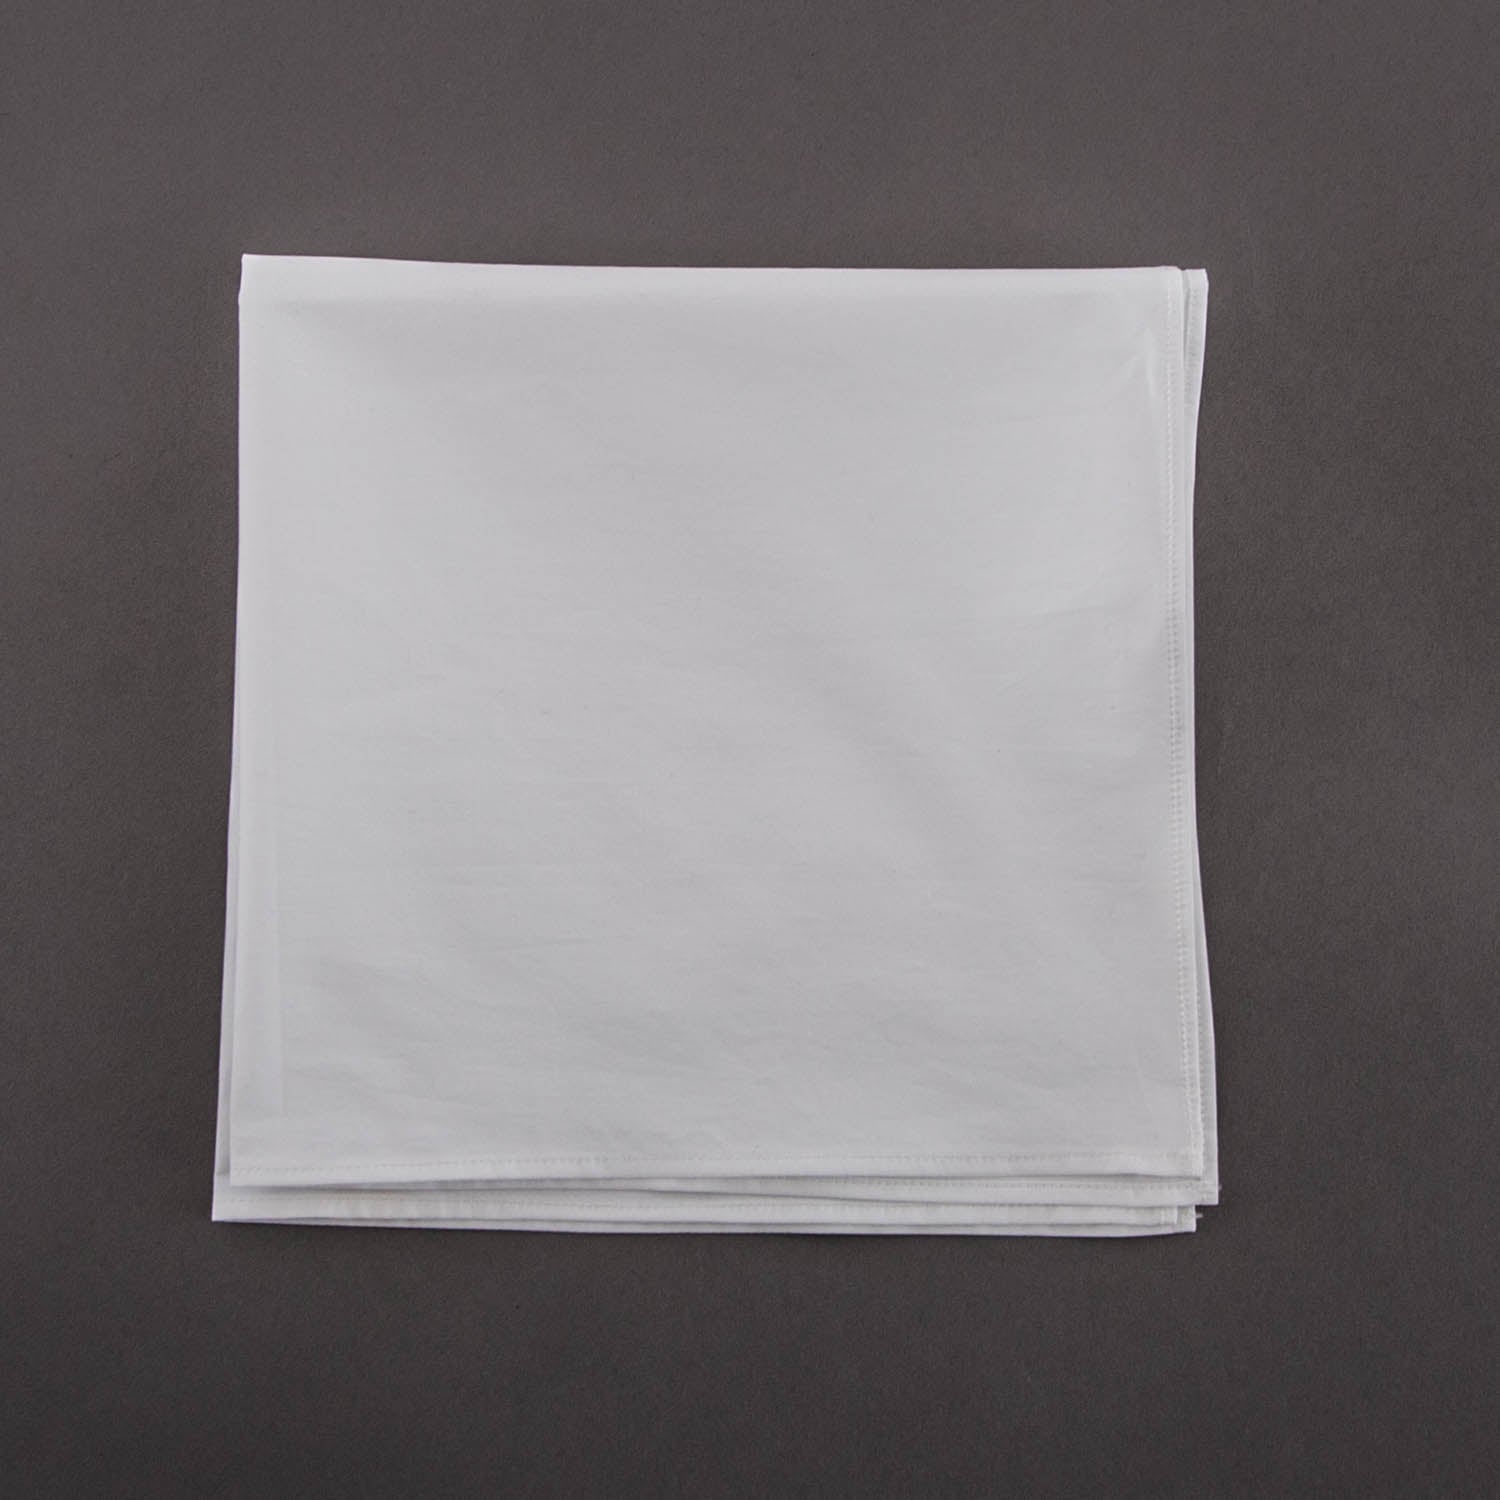 A Wellington High-Shine Cotton Chamois napkin on a grey background,
from KirbyAllison.com.